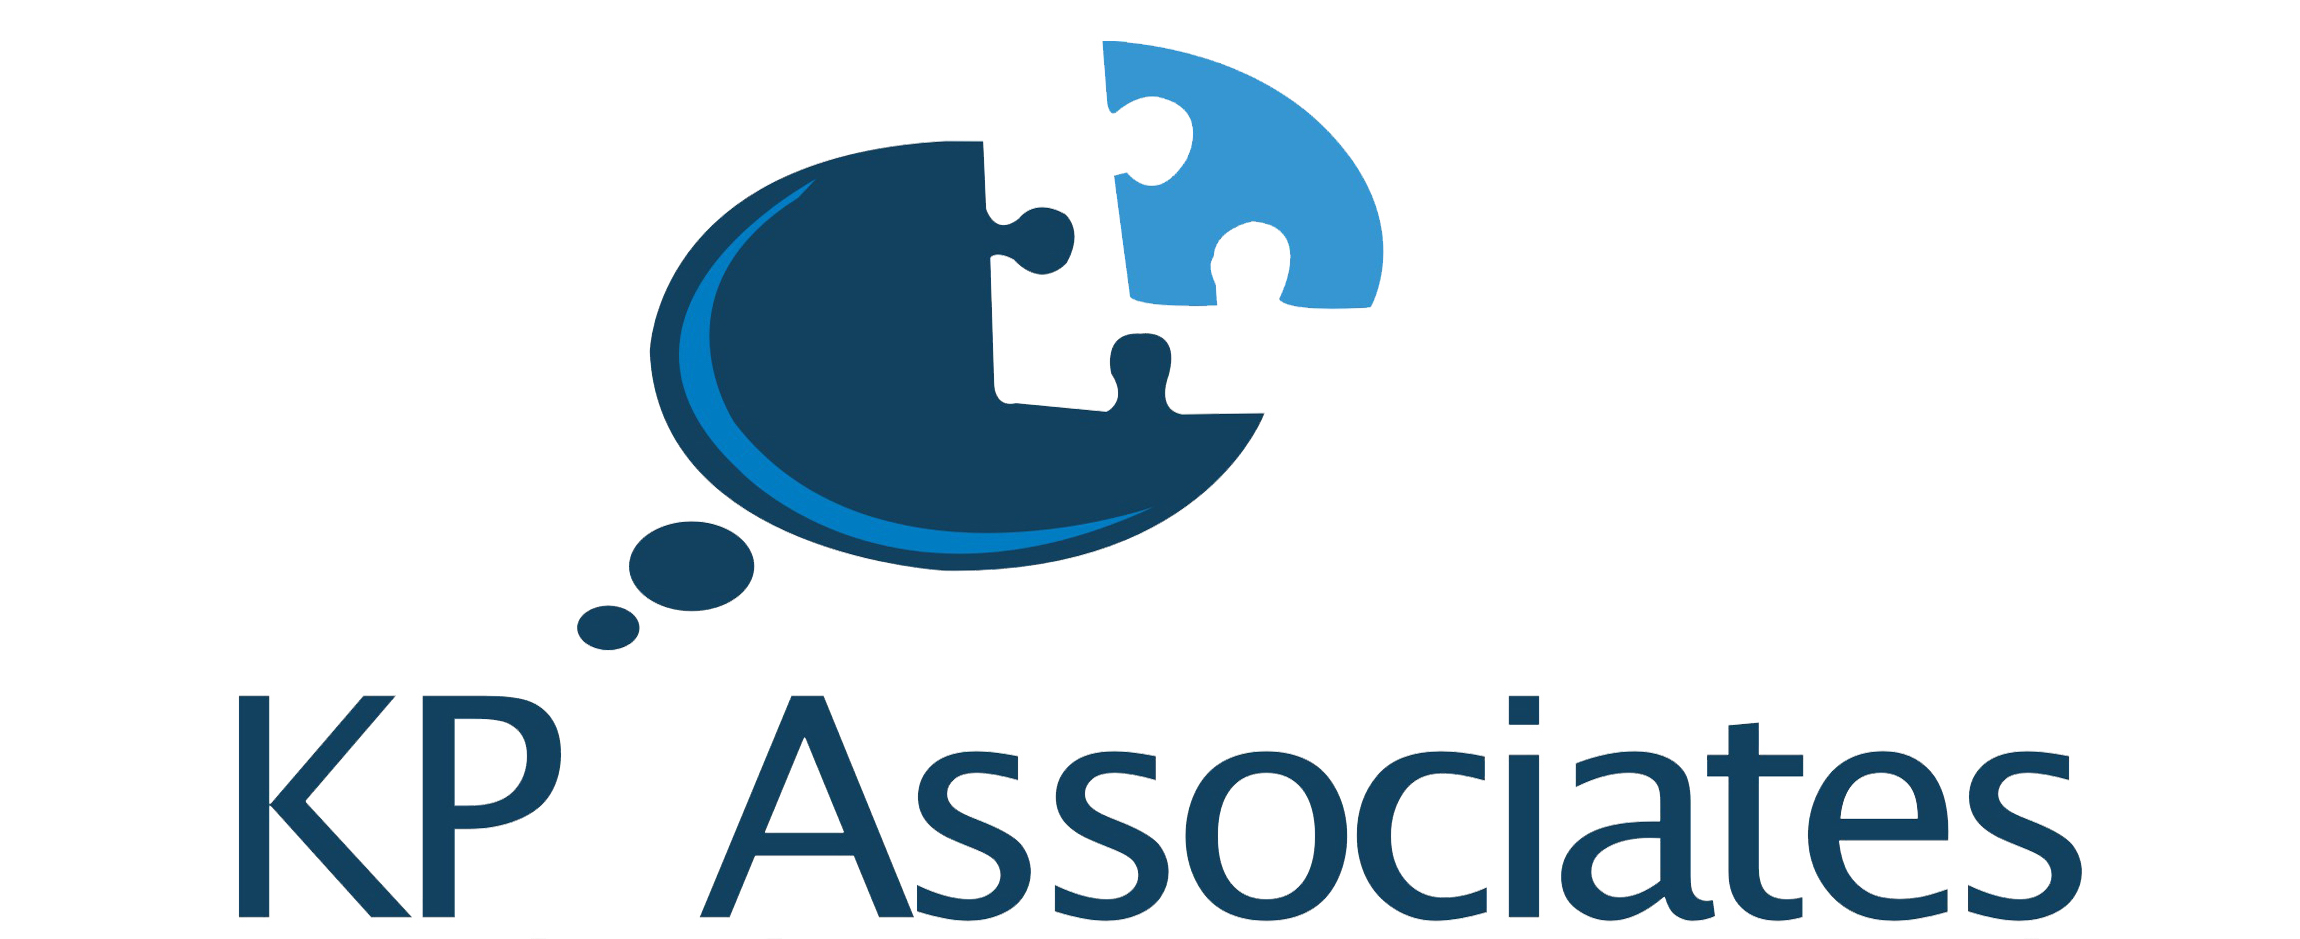 KP Associates Logo